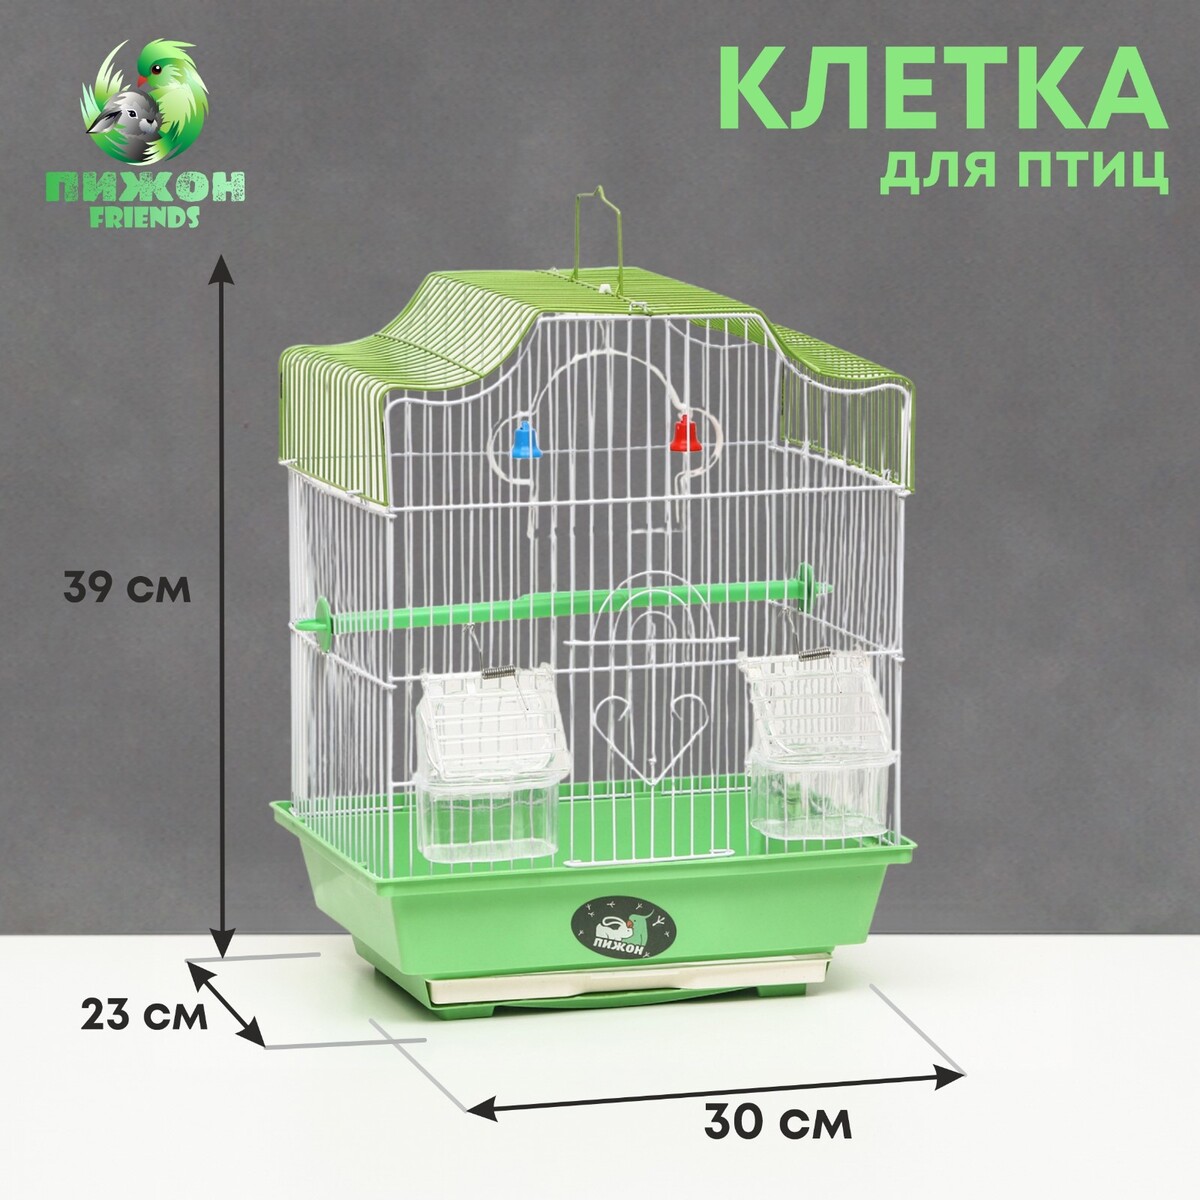 Клетка для птиц укомплектованная bd-1/4f, 30 х 23 х 39 см, зеленая Пижон